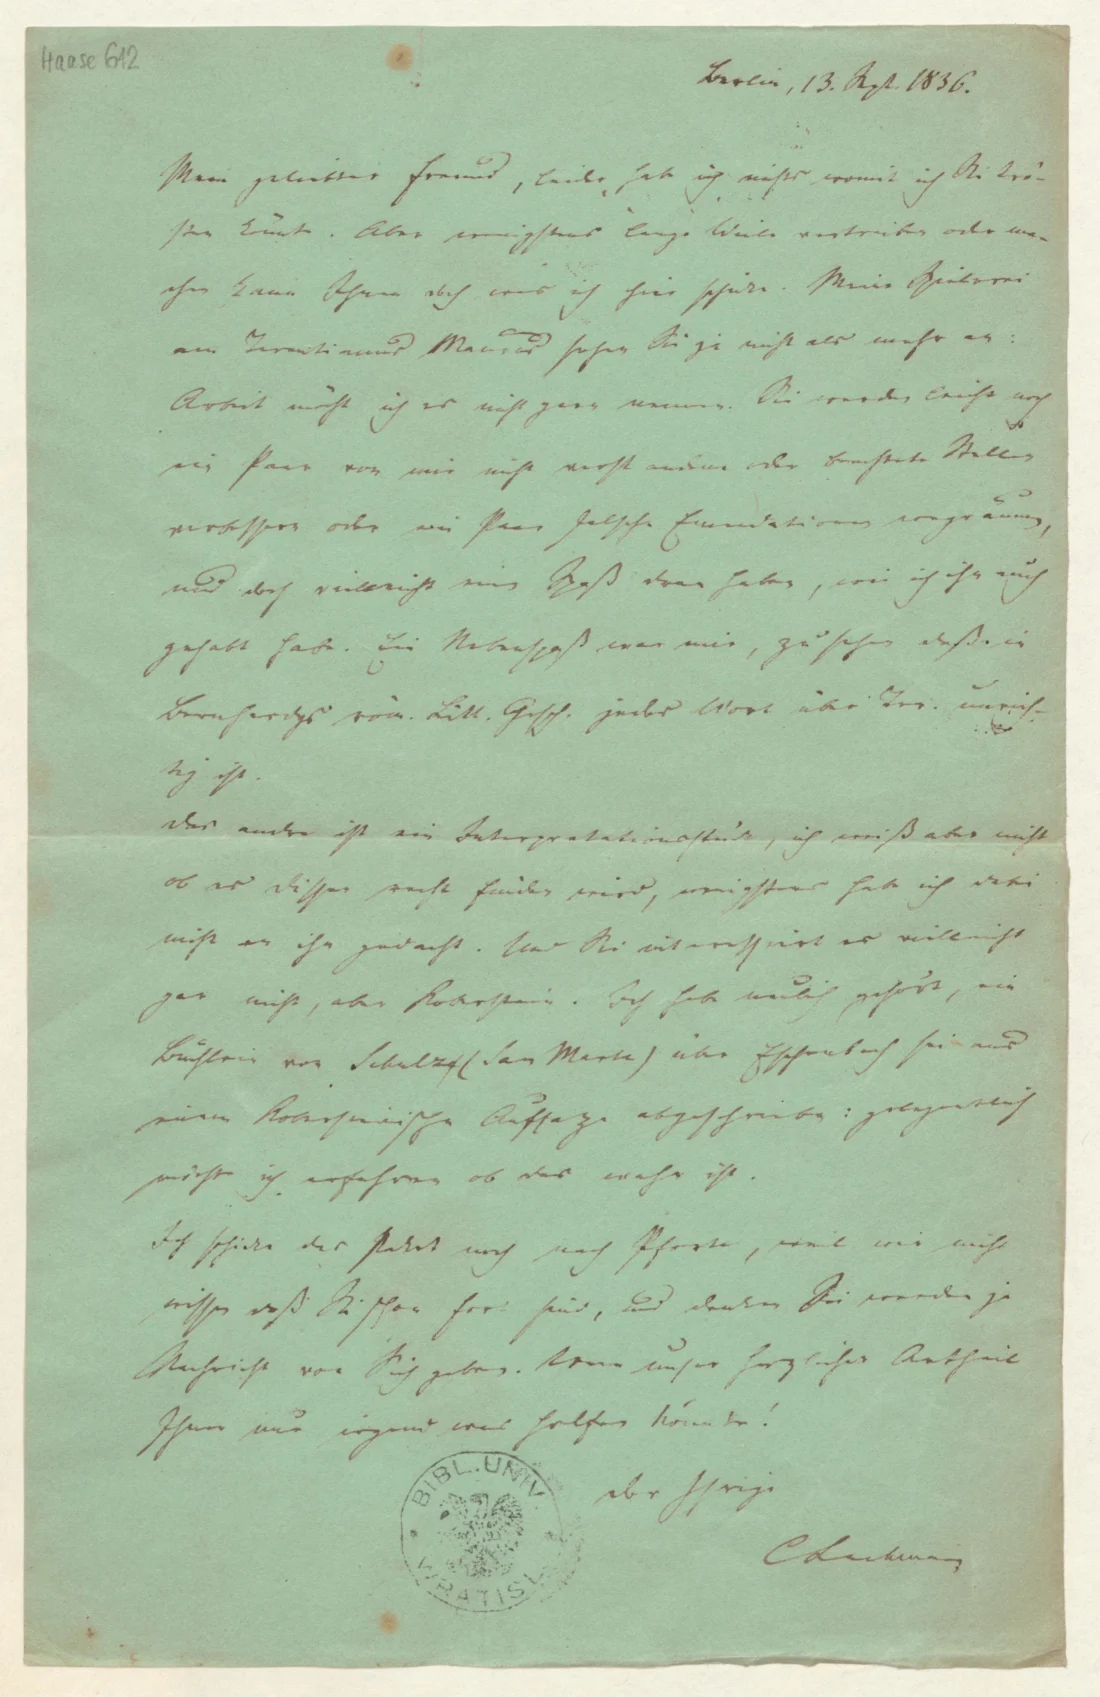 scan of a hand-written letter on light green paper